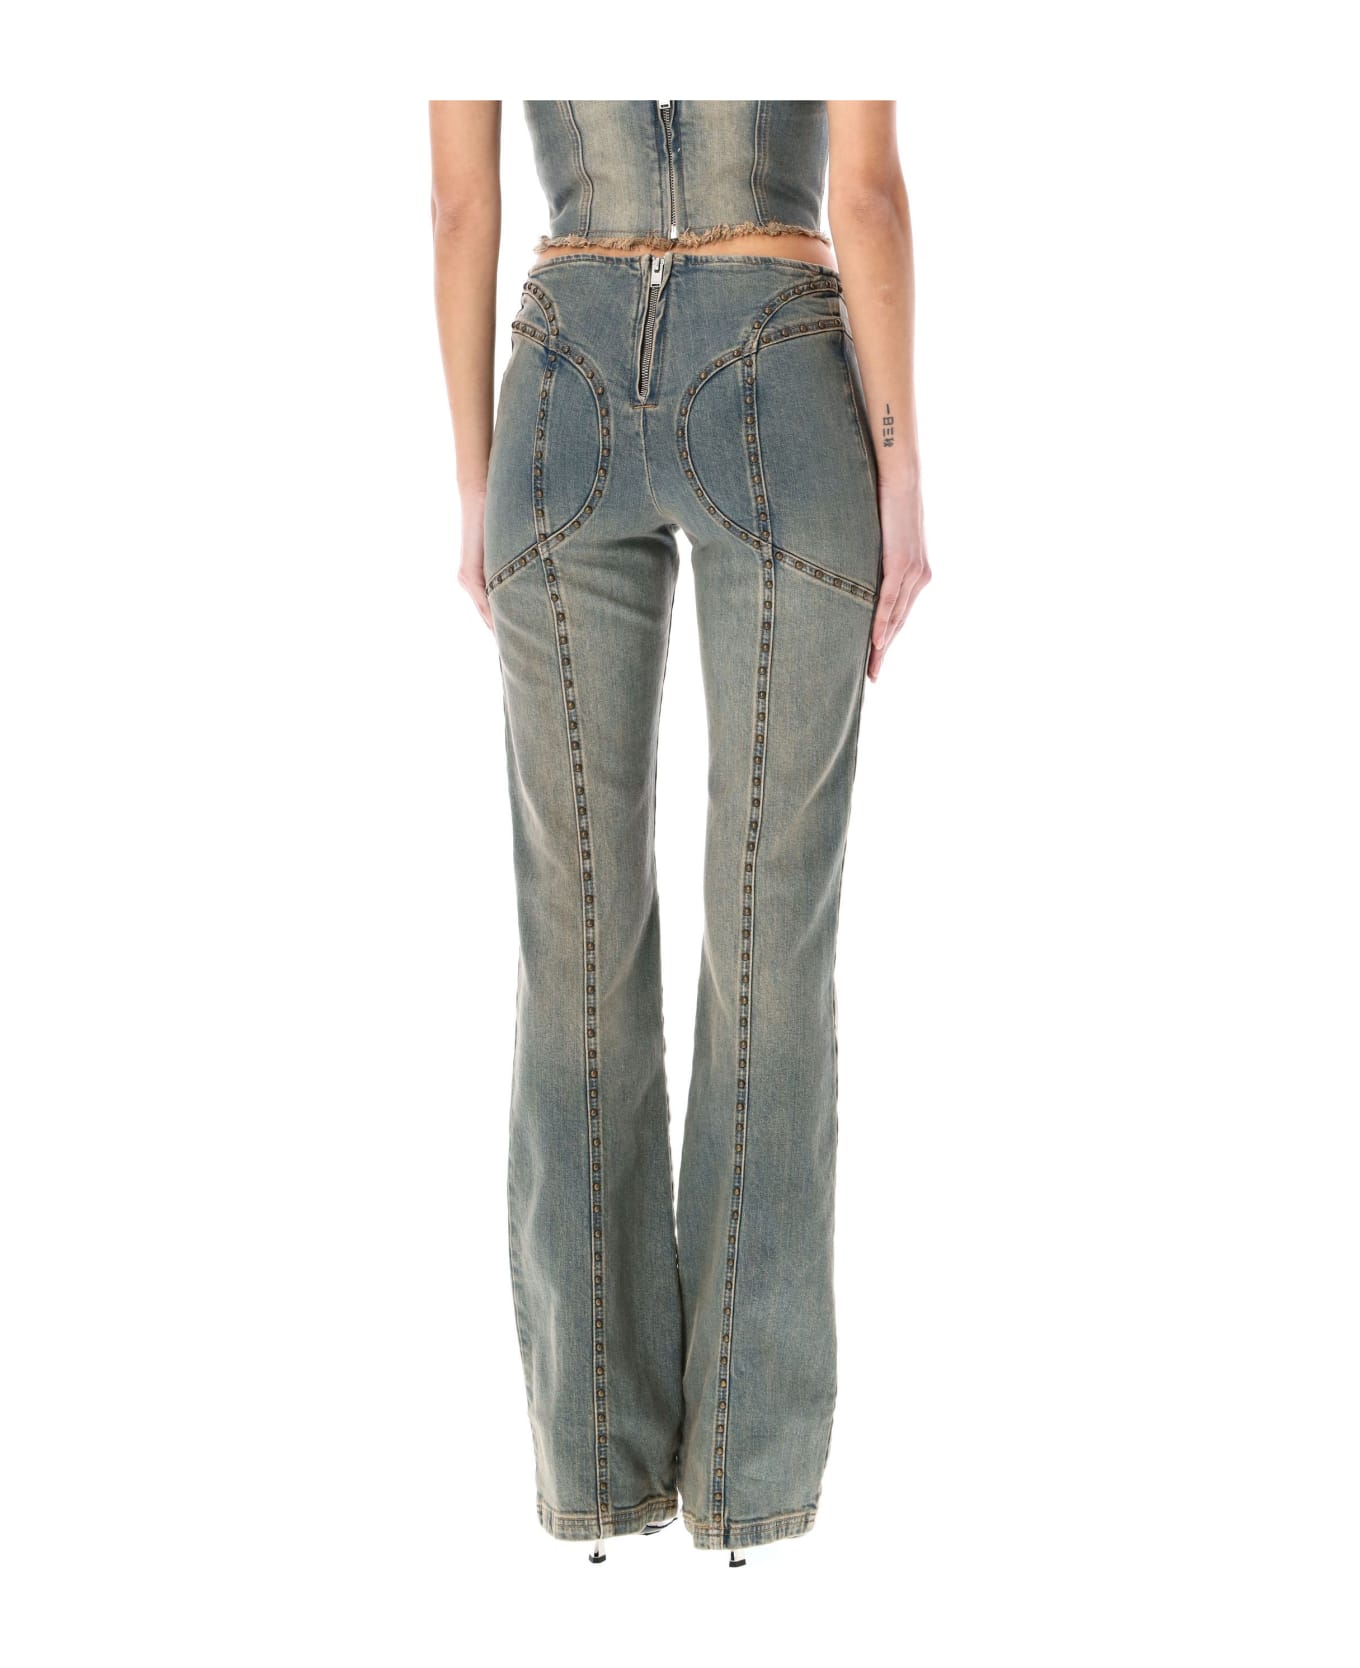 MISBHV Lara Laced Studded Jeans - BLUE SAND